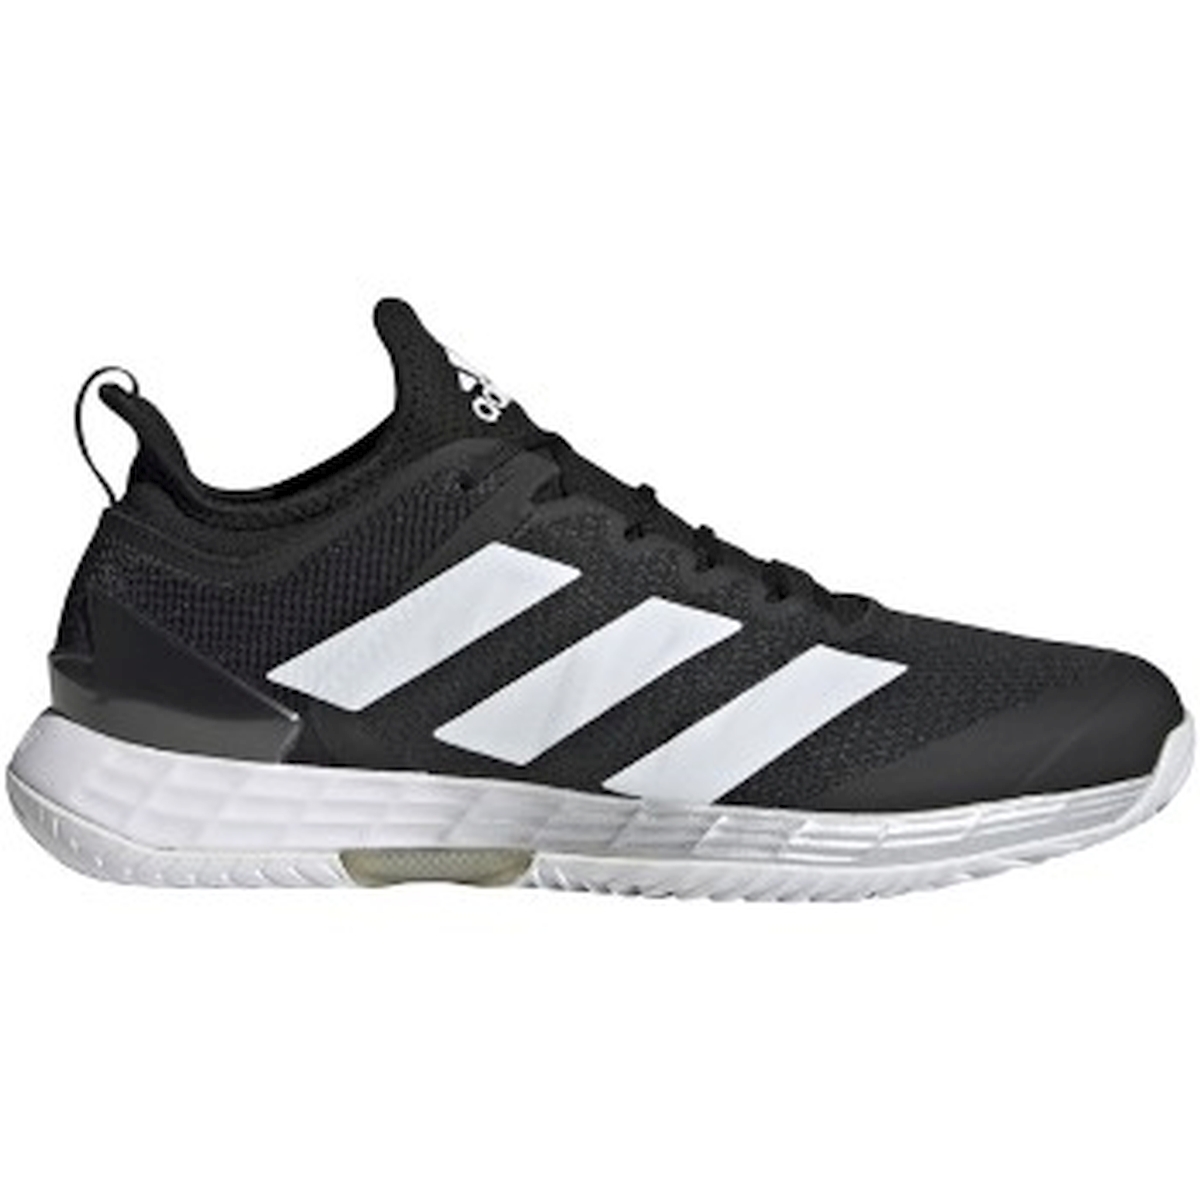 Adidas Men's Adizero Ubersonic 4 Tennis Shoes (Core Black/Flat White/Silver Metallic)